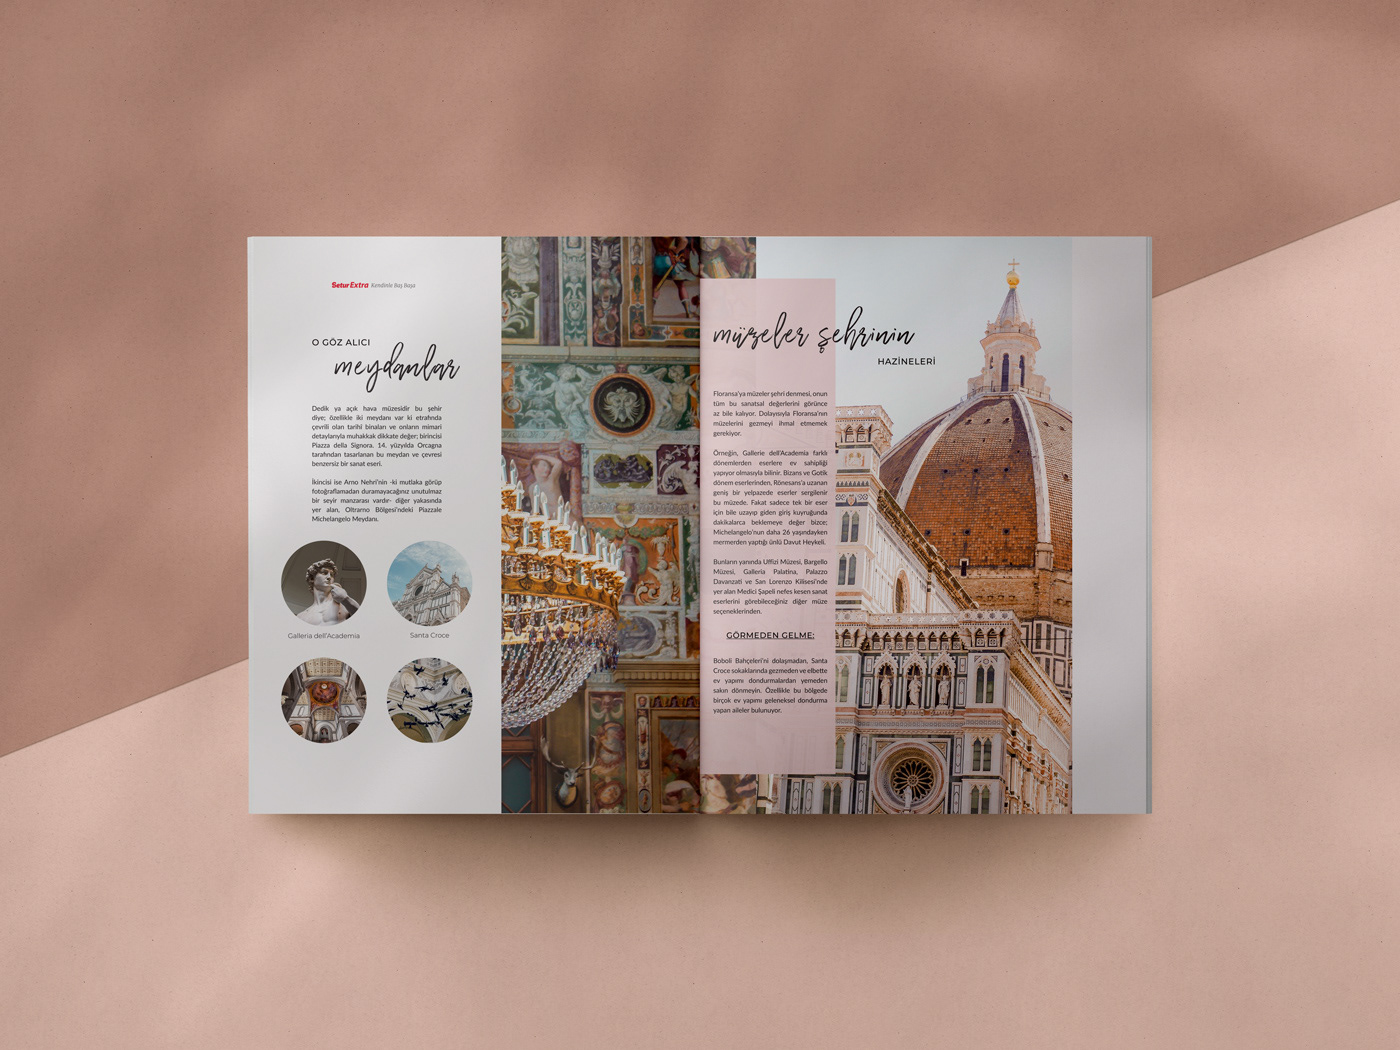 Travel Magazine Design